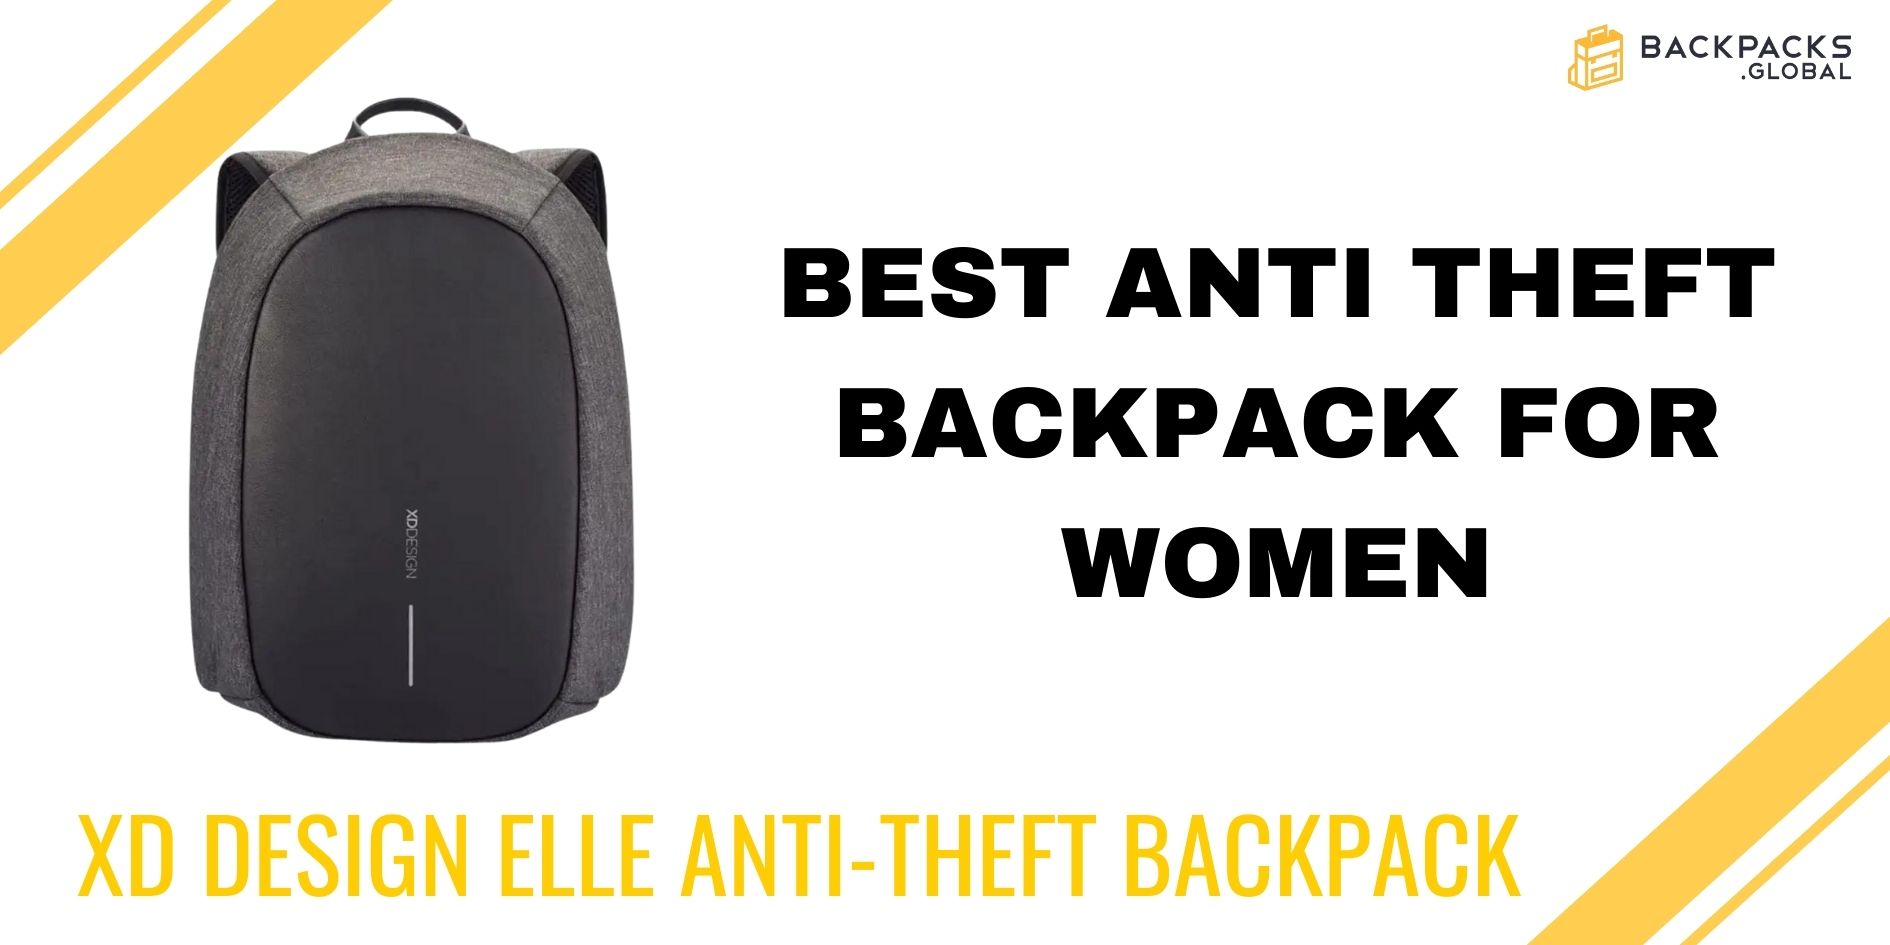 XD Design Elle Anti-Theft Backpack